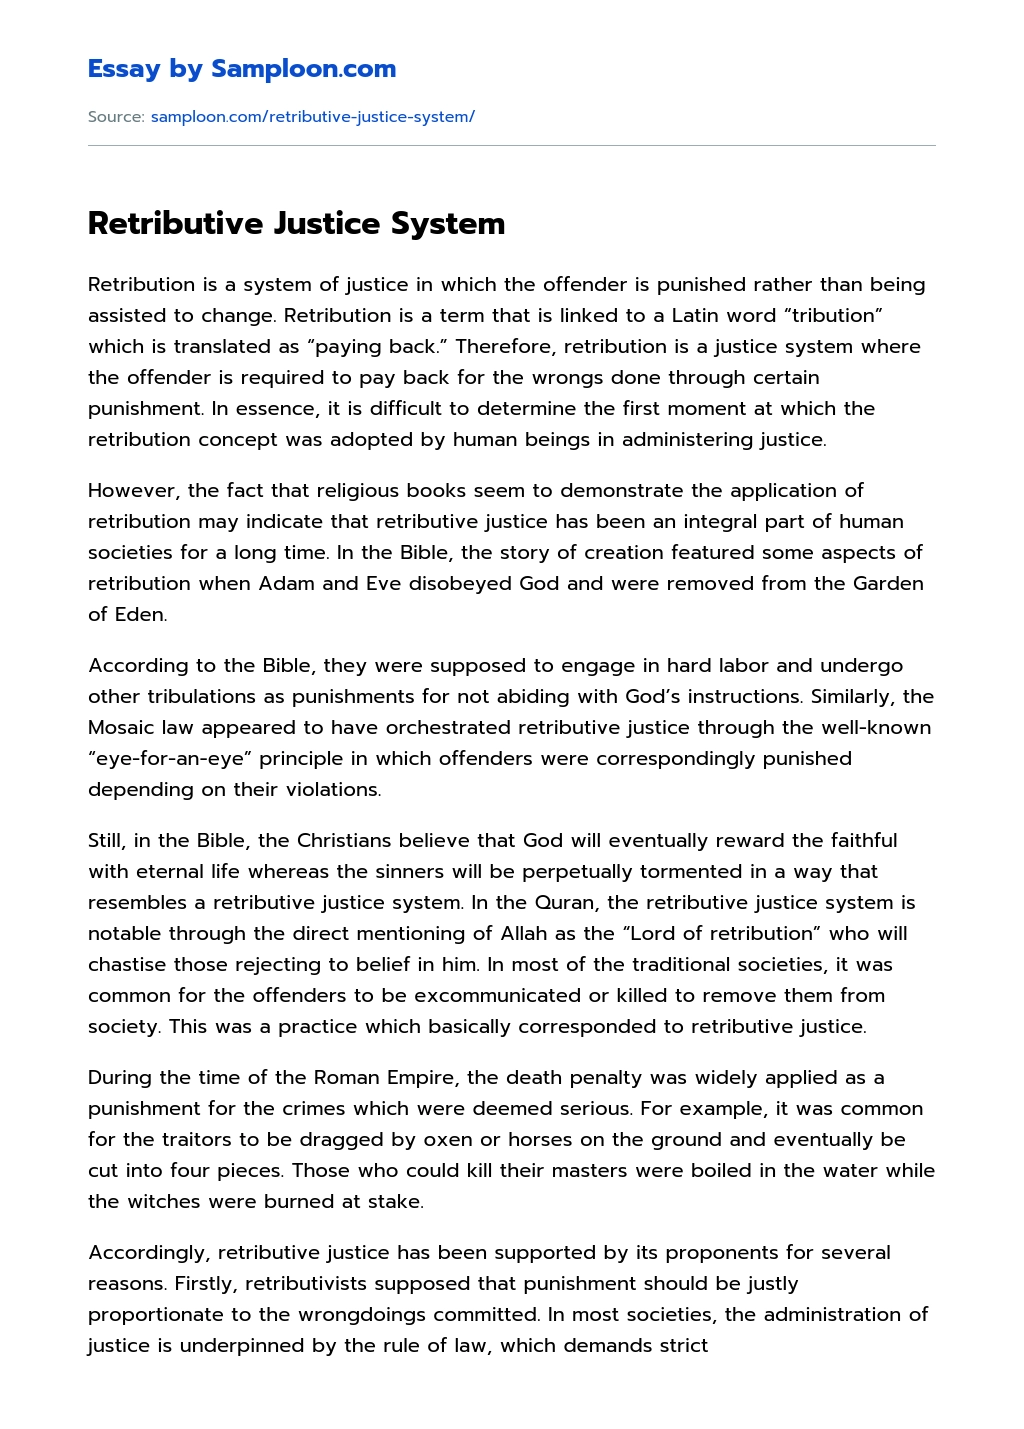 Retributive Justice System essay